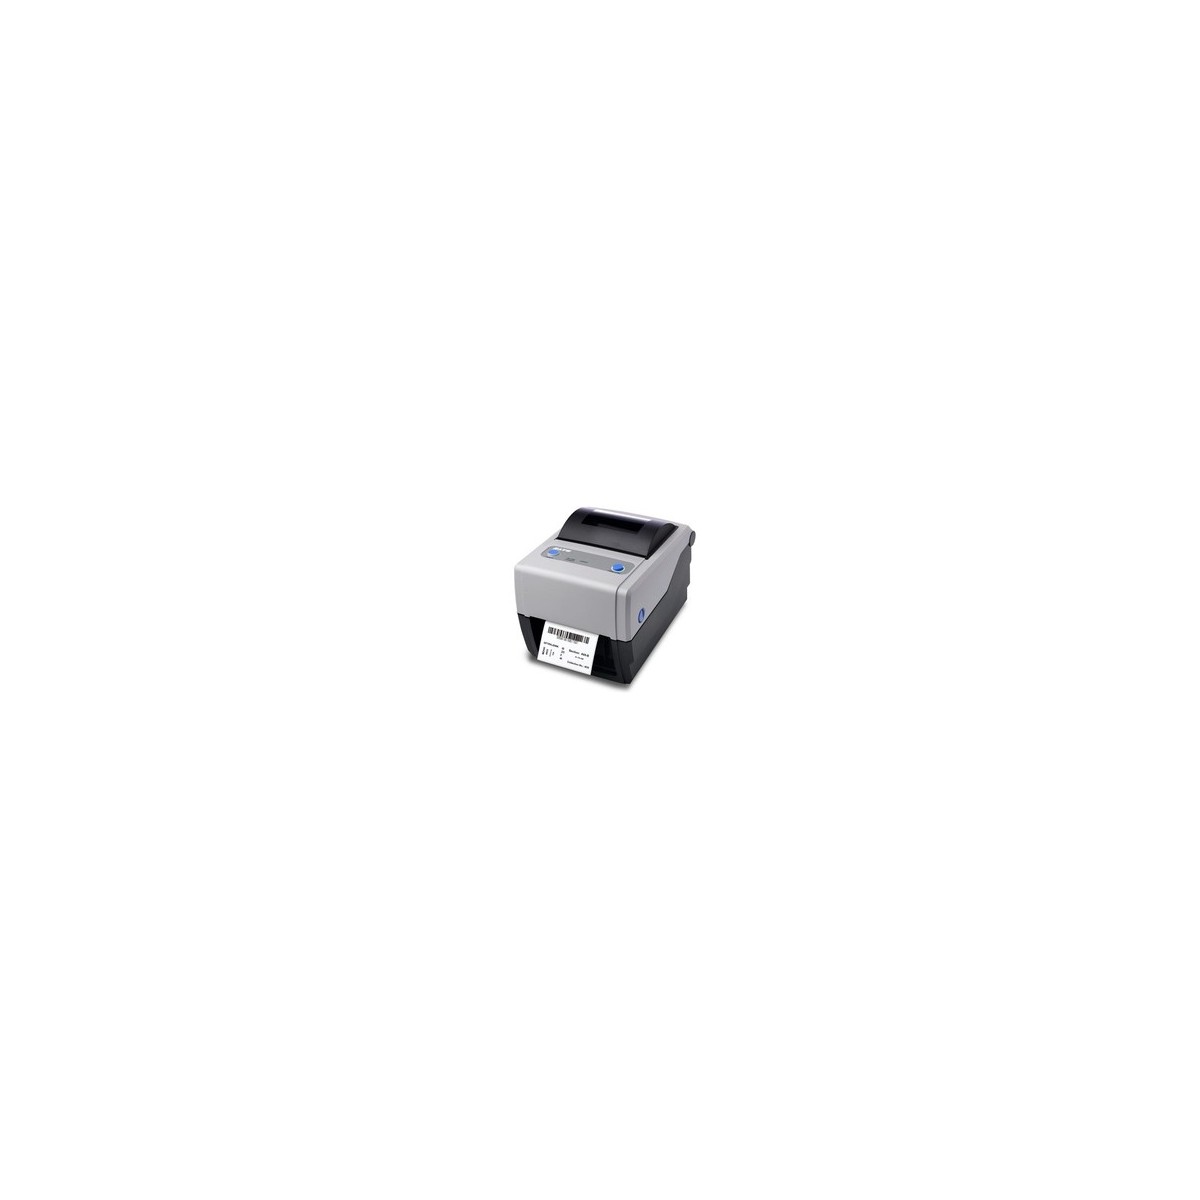 SATO CG412TT - Thermal transfer - 305 x 305 DPI - 100 mm-sec - Wired - Black - Grey